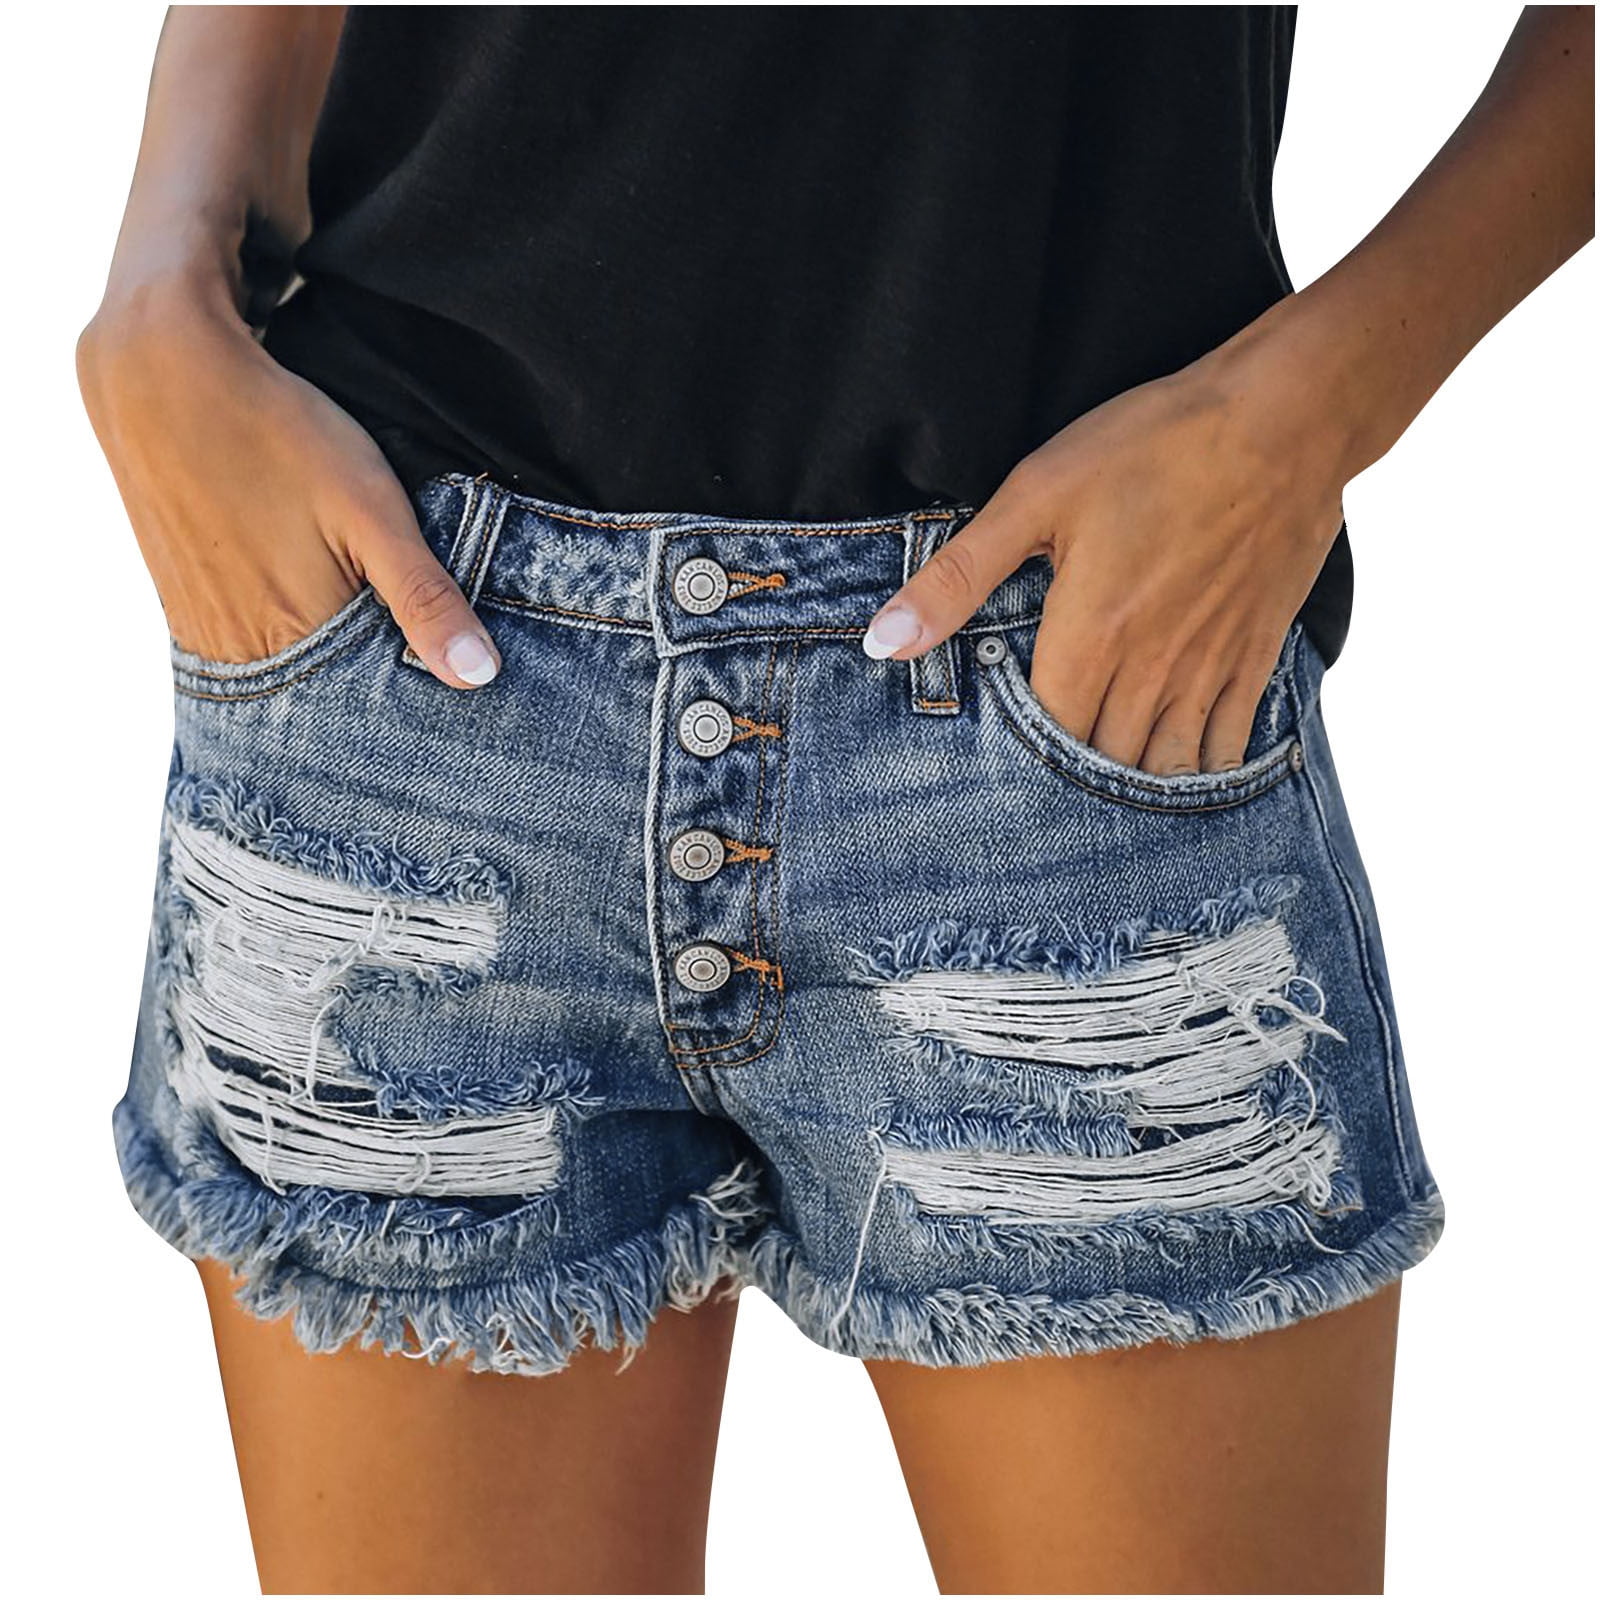 Babysbule Women Shorts Clearance Fashion Womens Pocket Solid Jeans ...